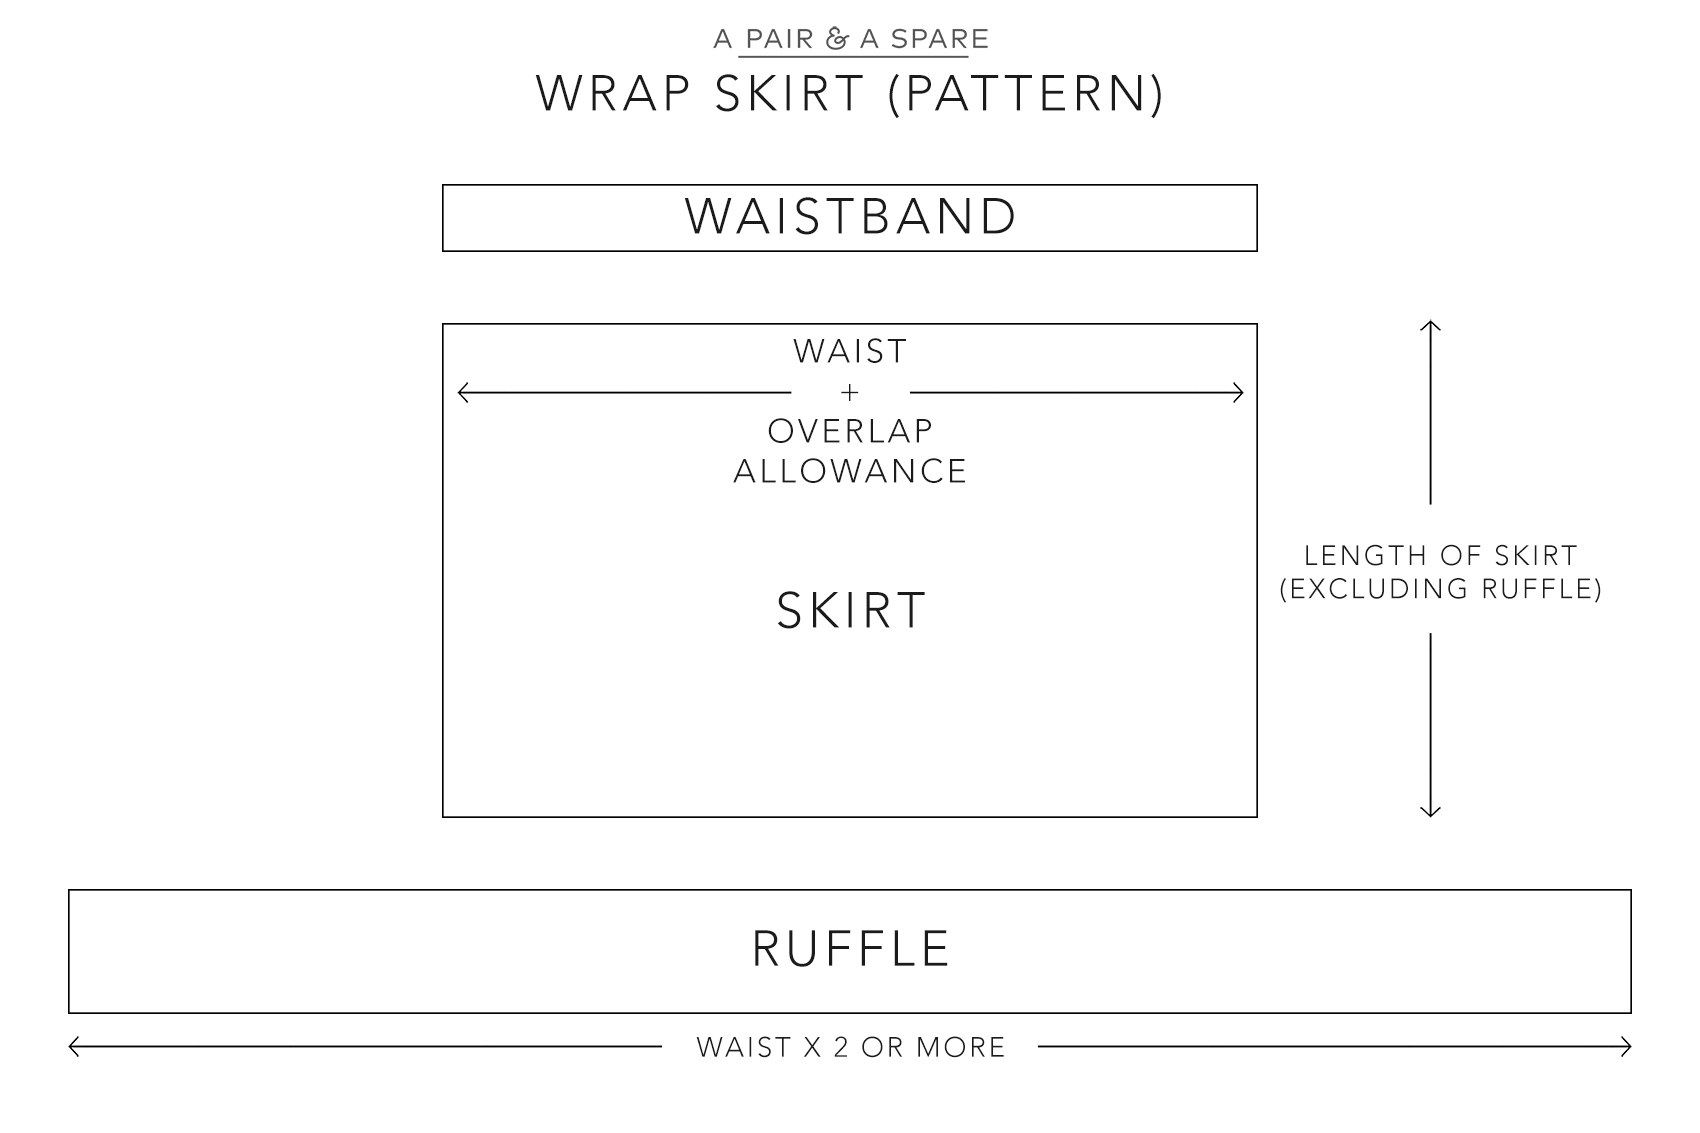 DIY Ruffle Wrap Skirt